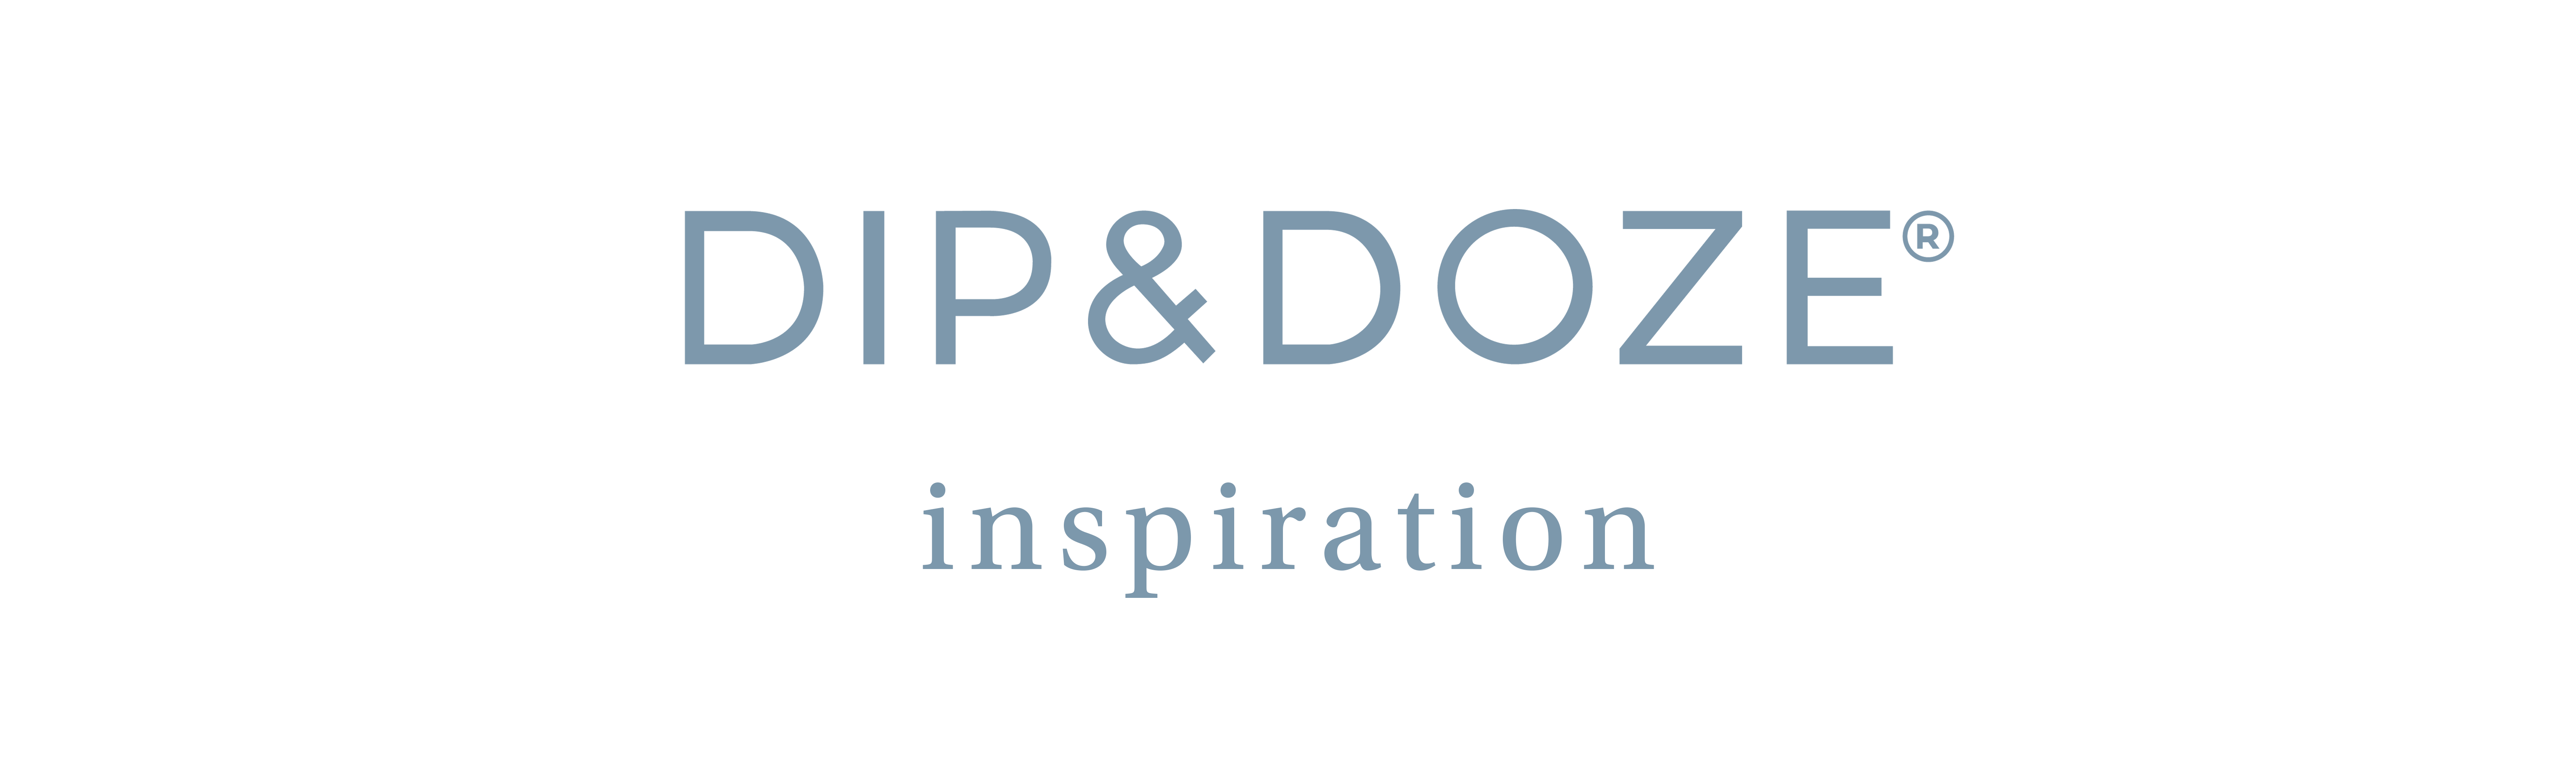 Dip & Doze Inspiration